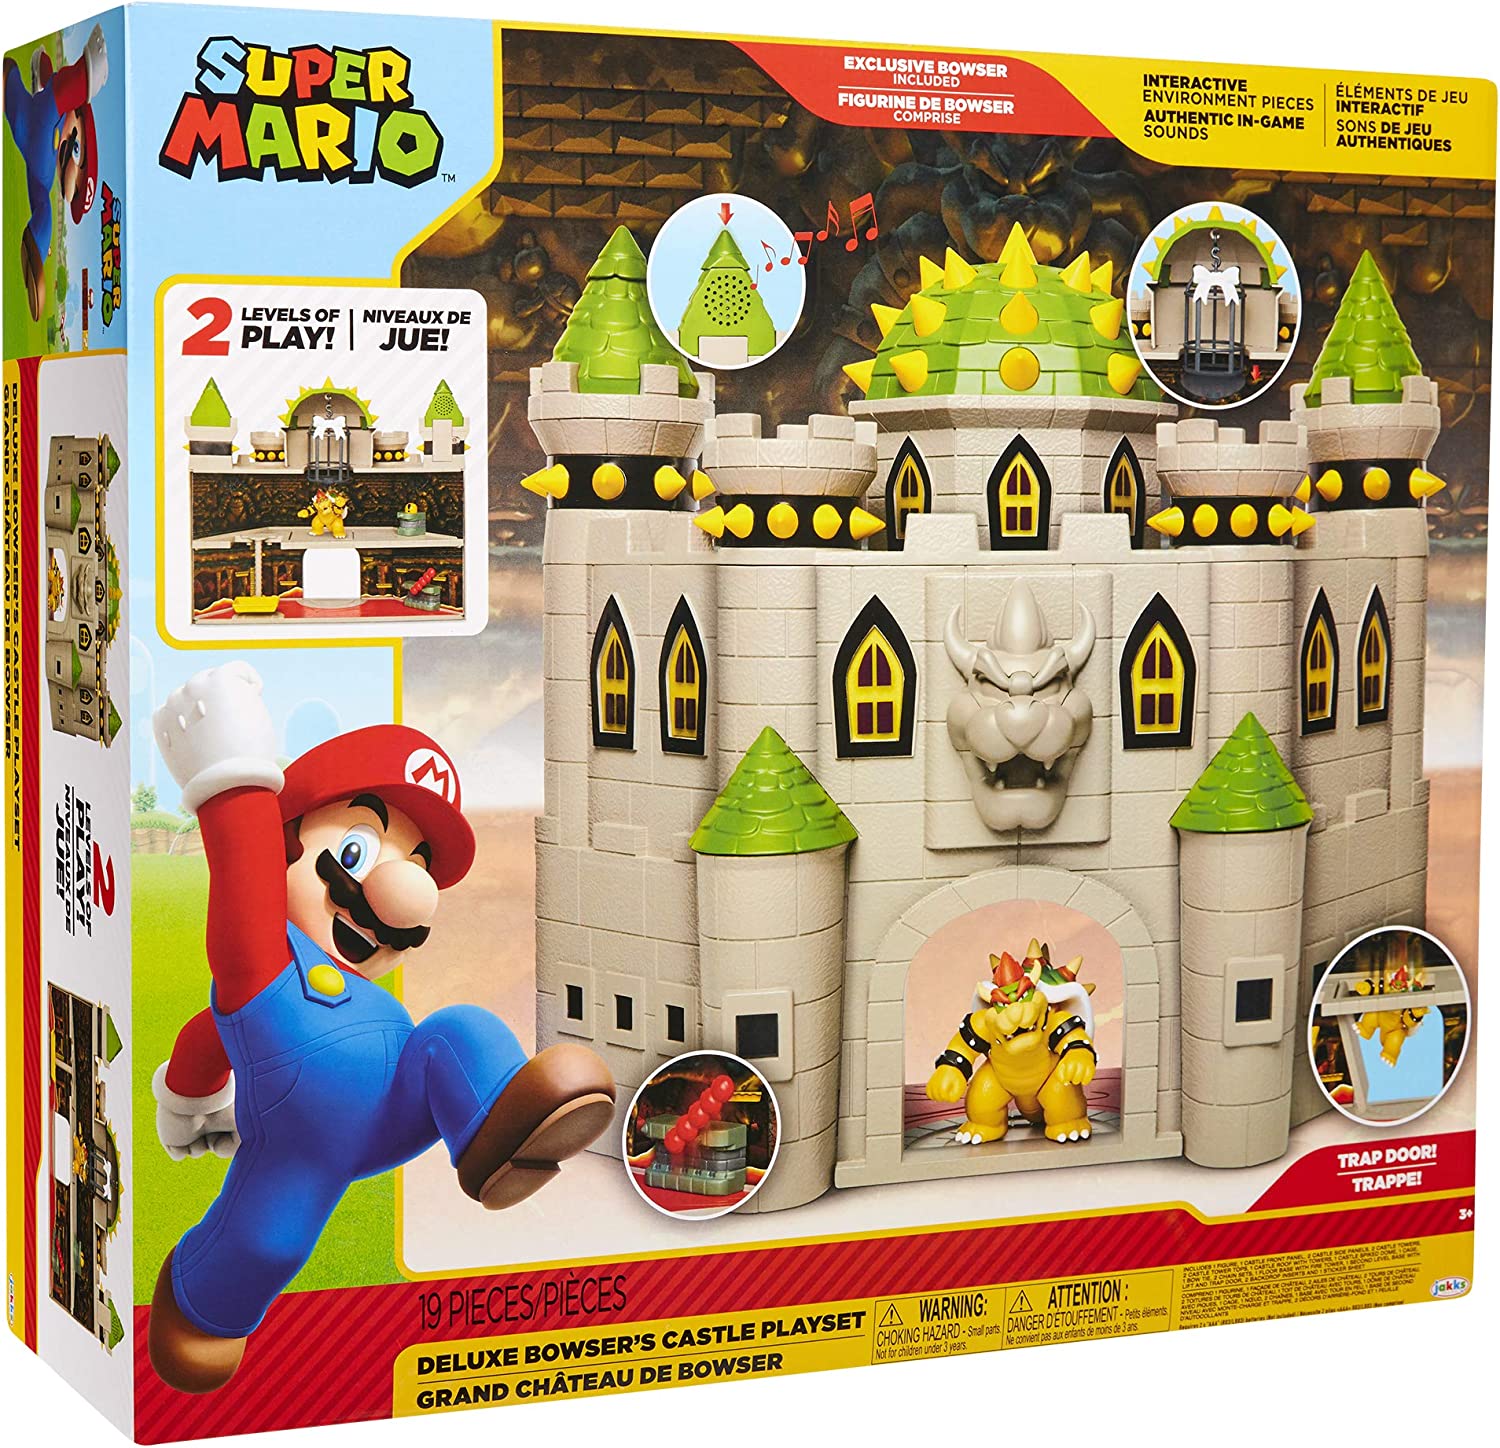 World of Nintendo Super Mario Deluxe Bowser Castle Playset